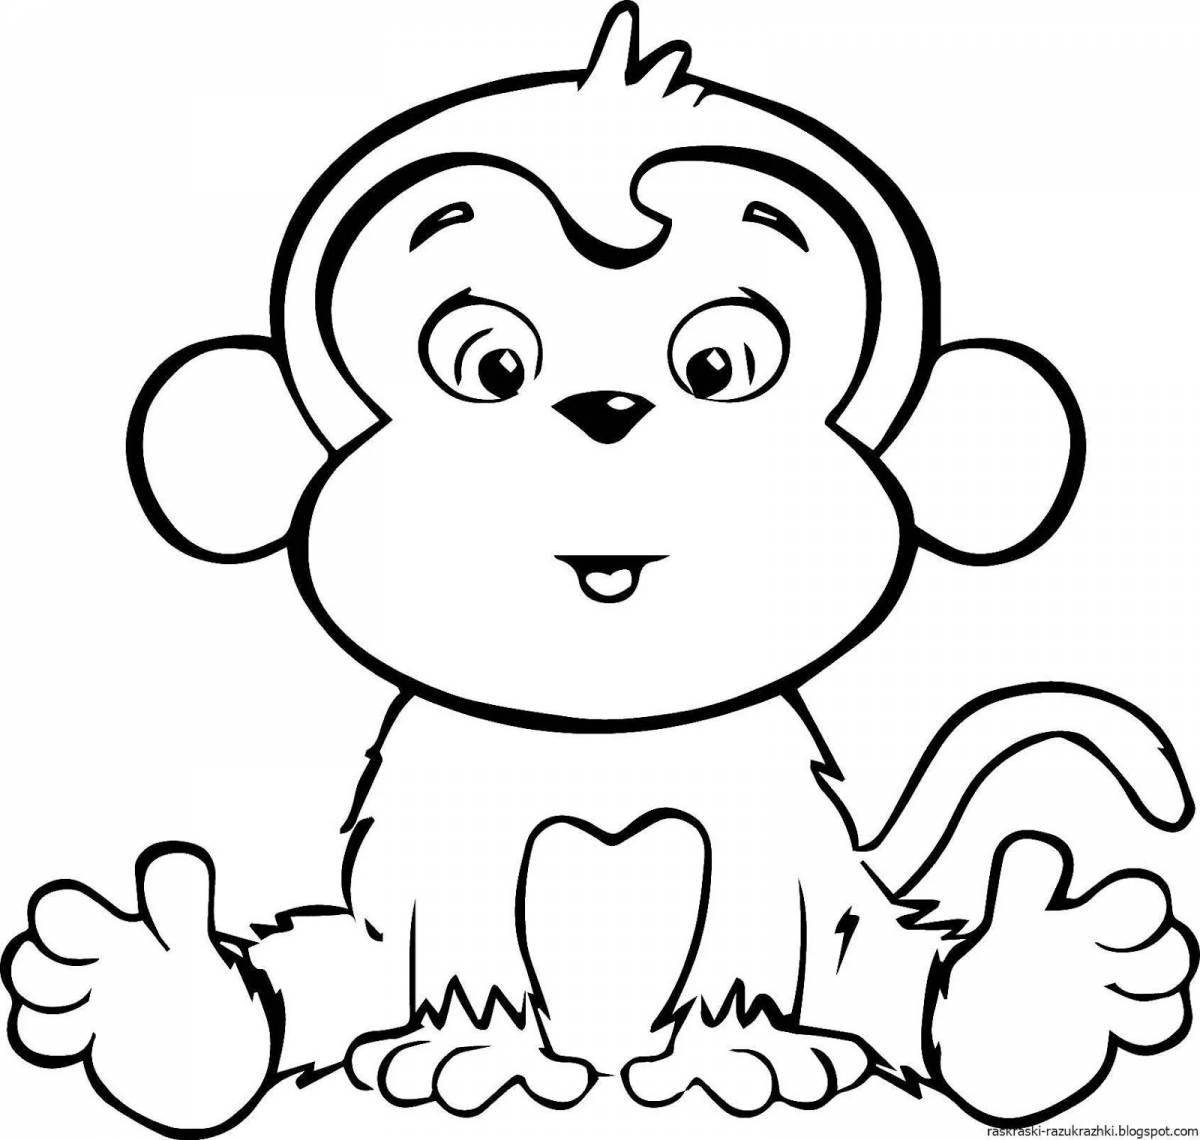 Chimpanzee fun coloring for kids